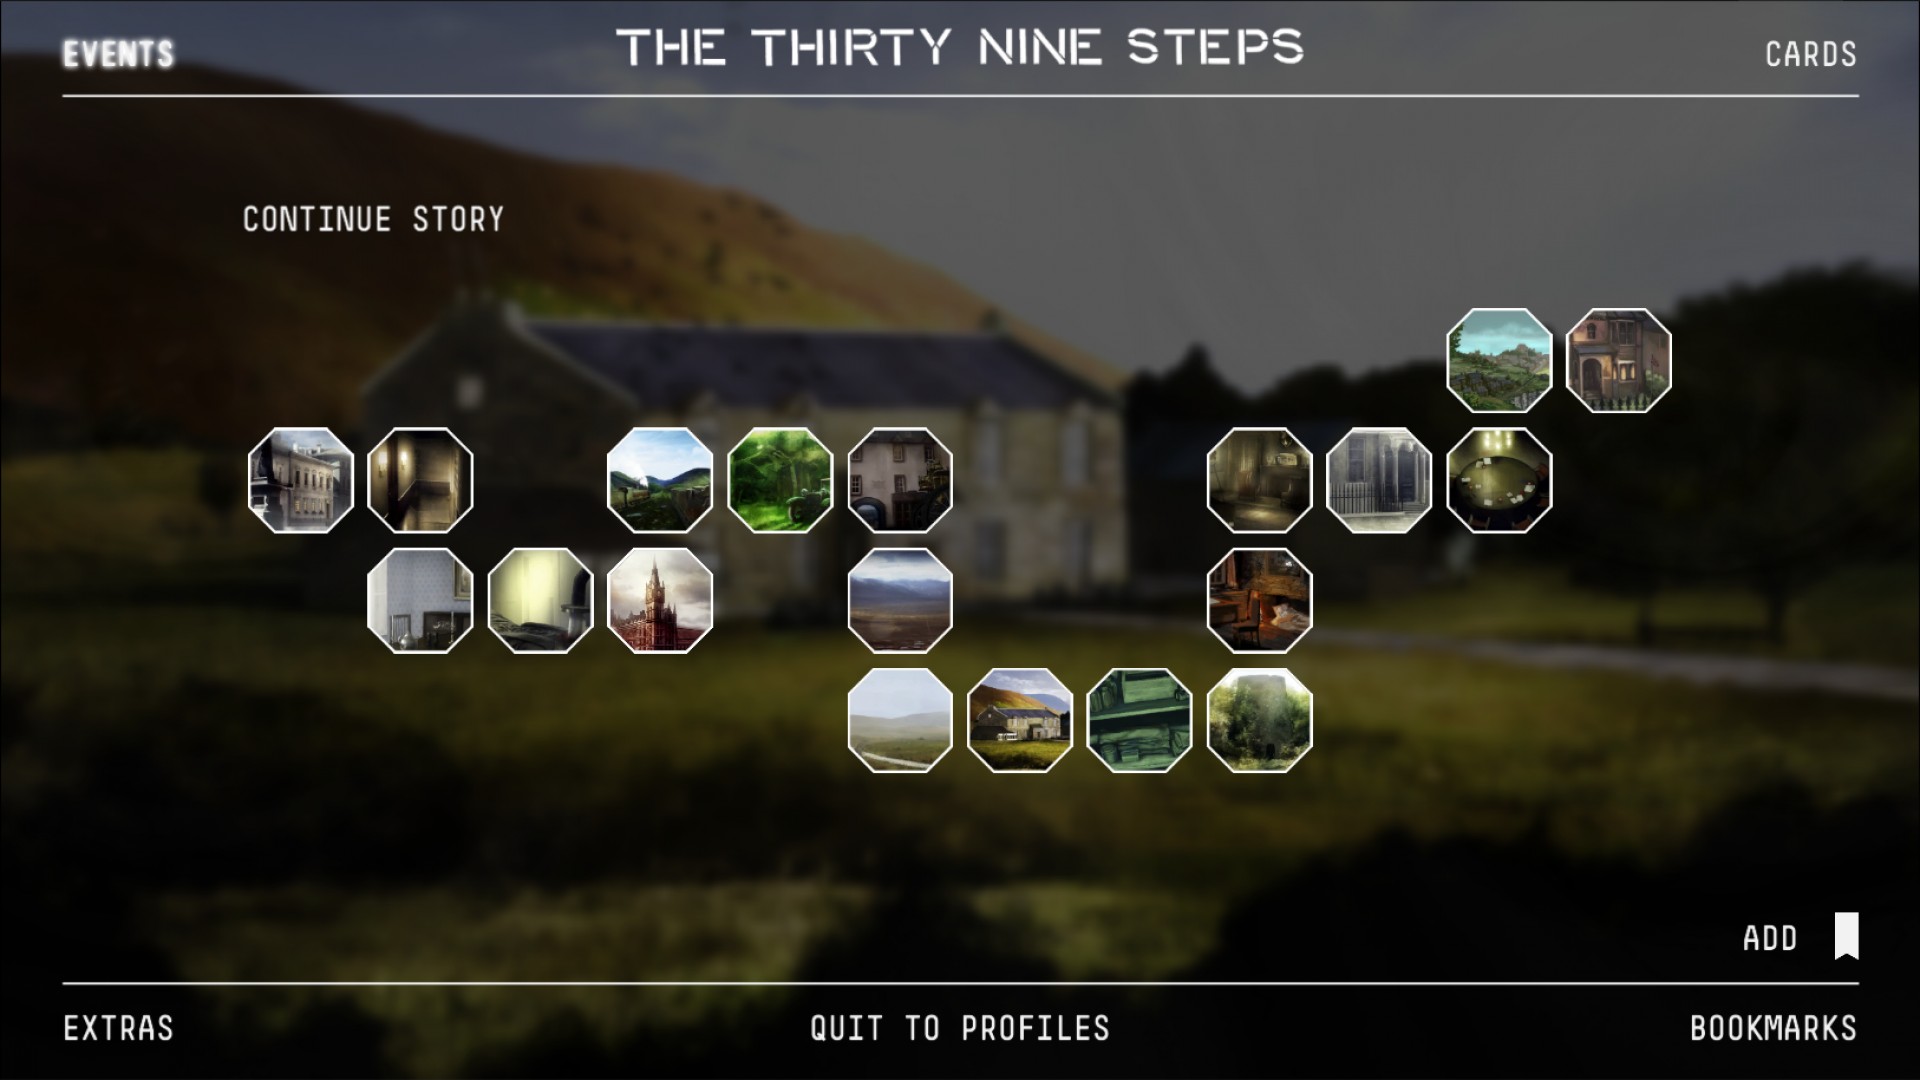 The 39 Steps screenshot